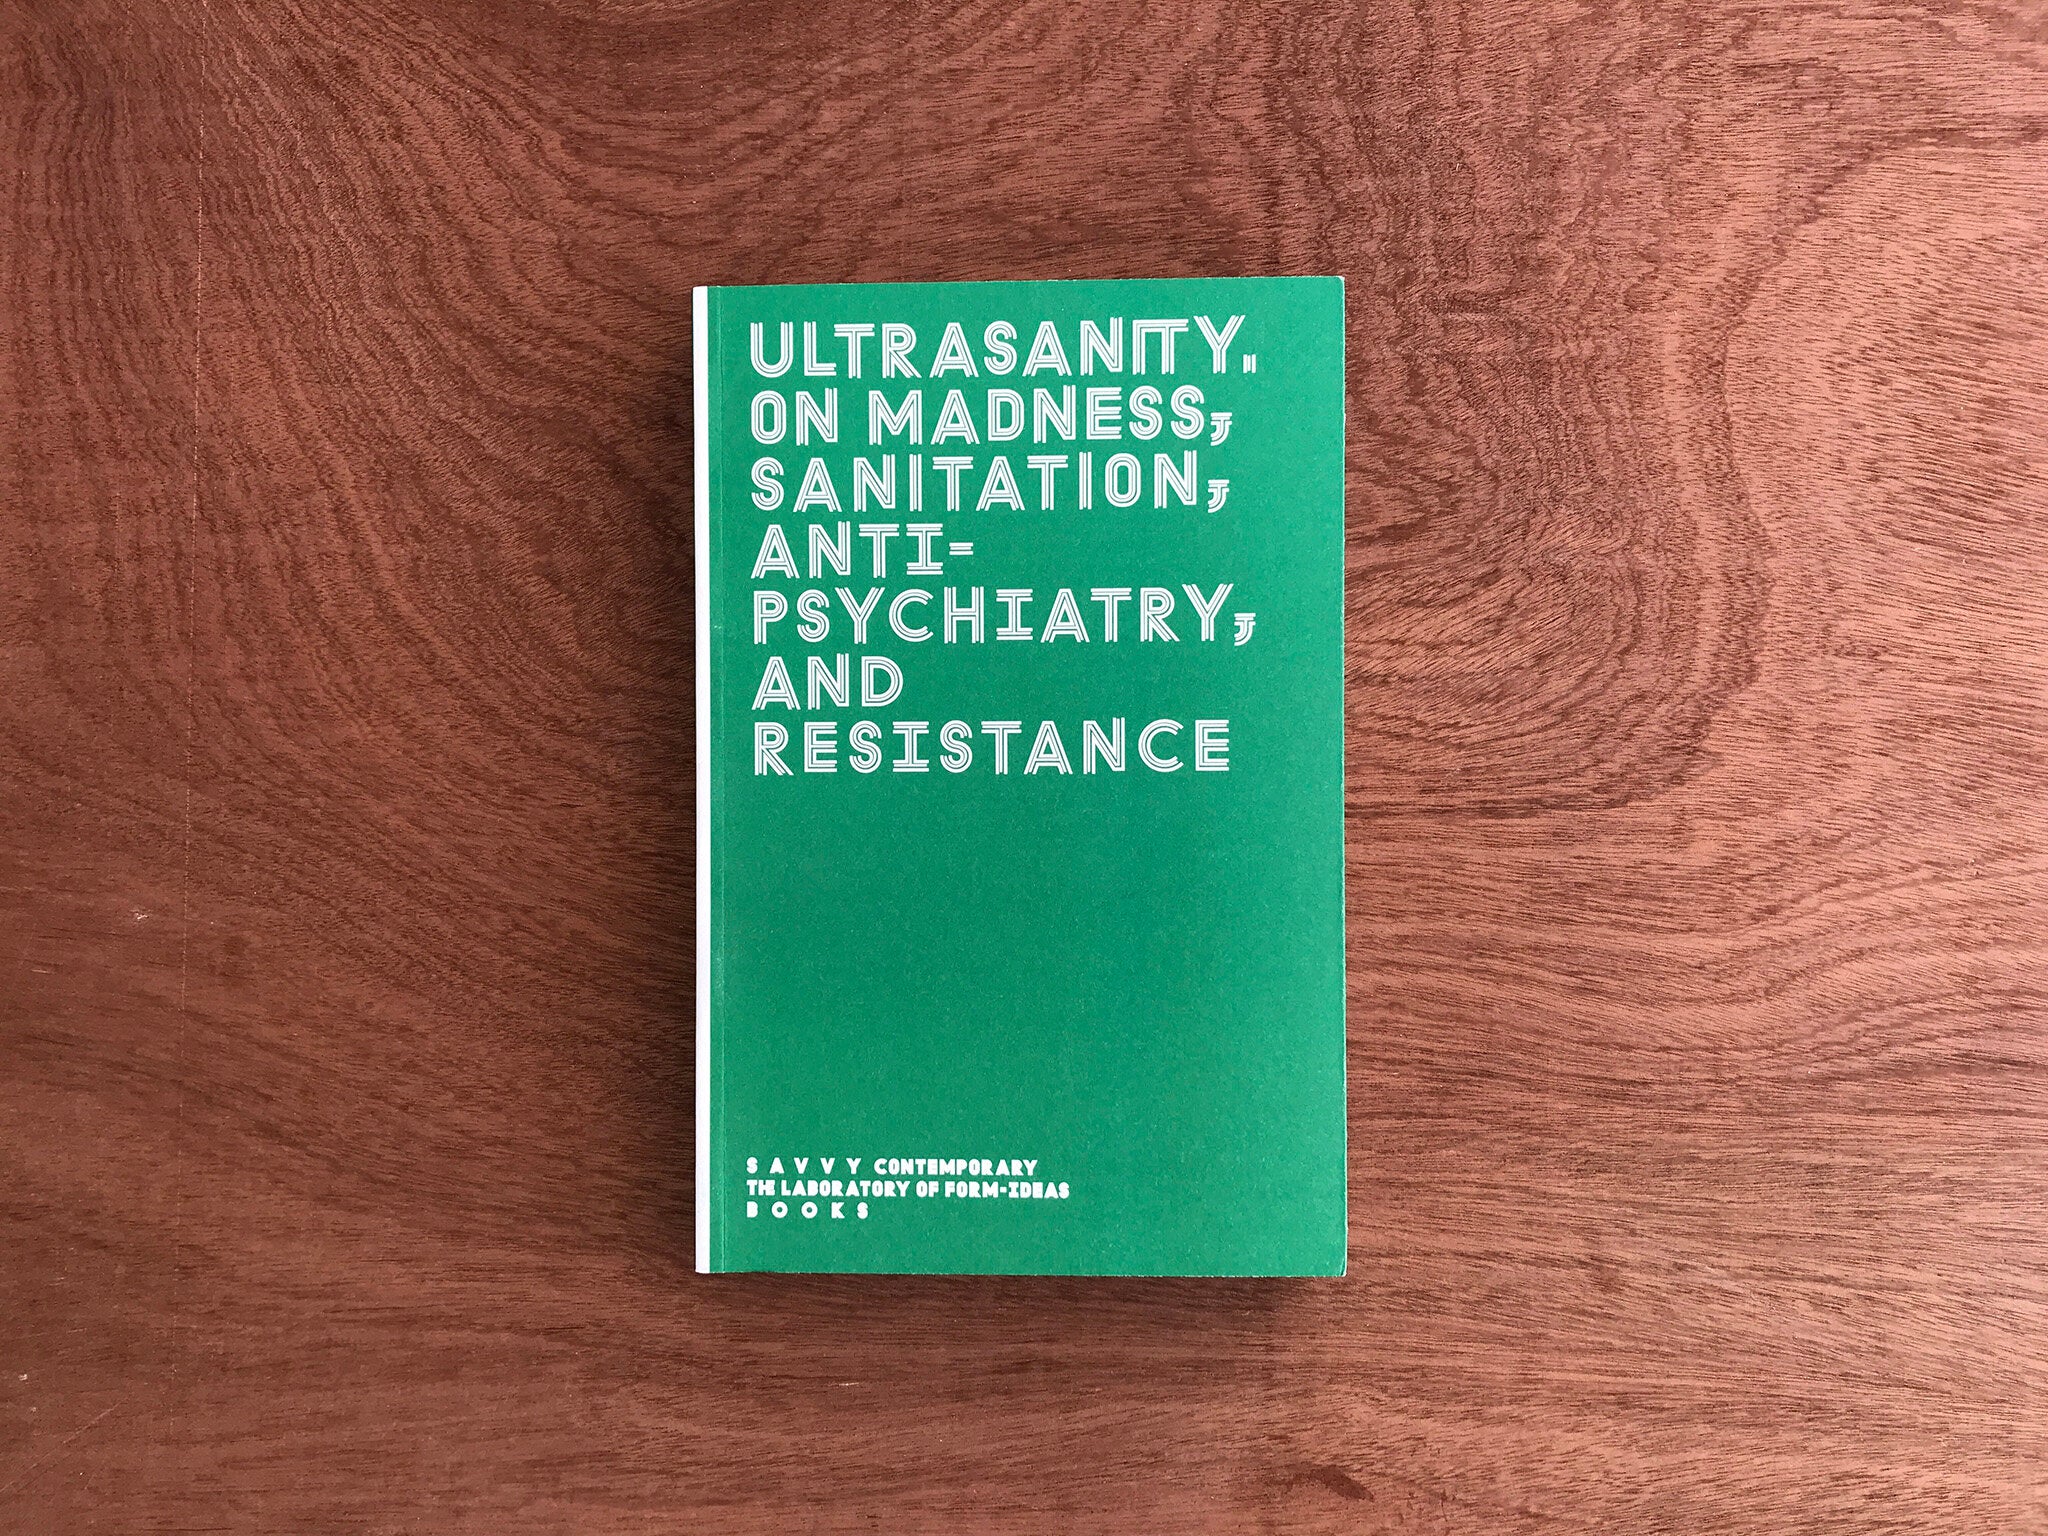 ULTRASANITY – ON MADNESS, SANITATION, ANTIPSYCHIATRY, AND RESISTANCE